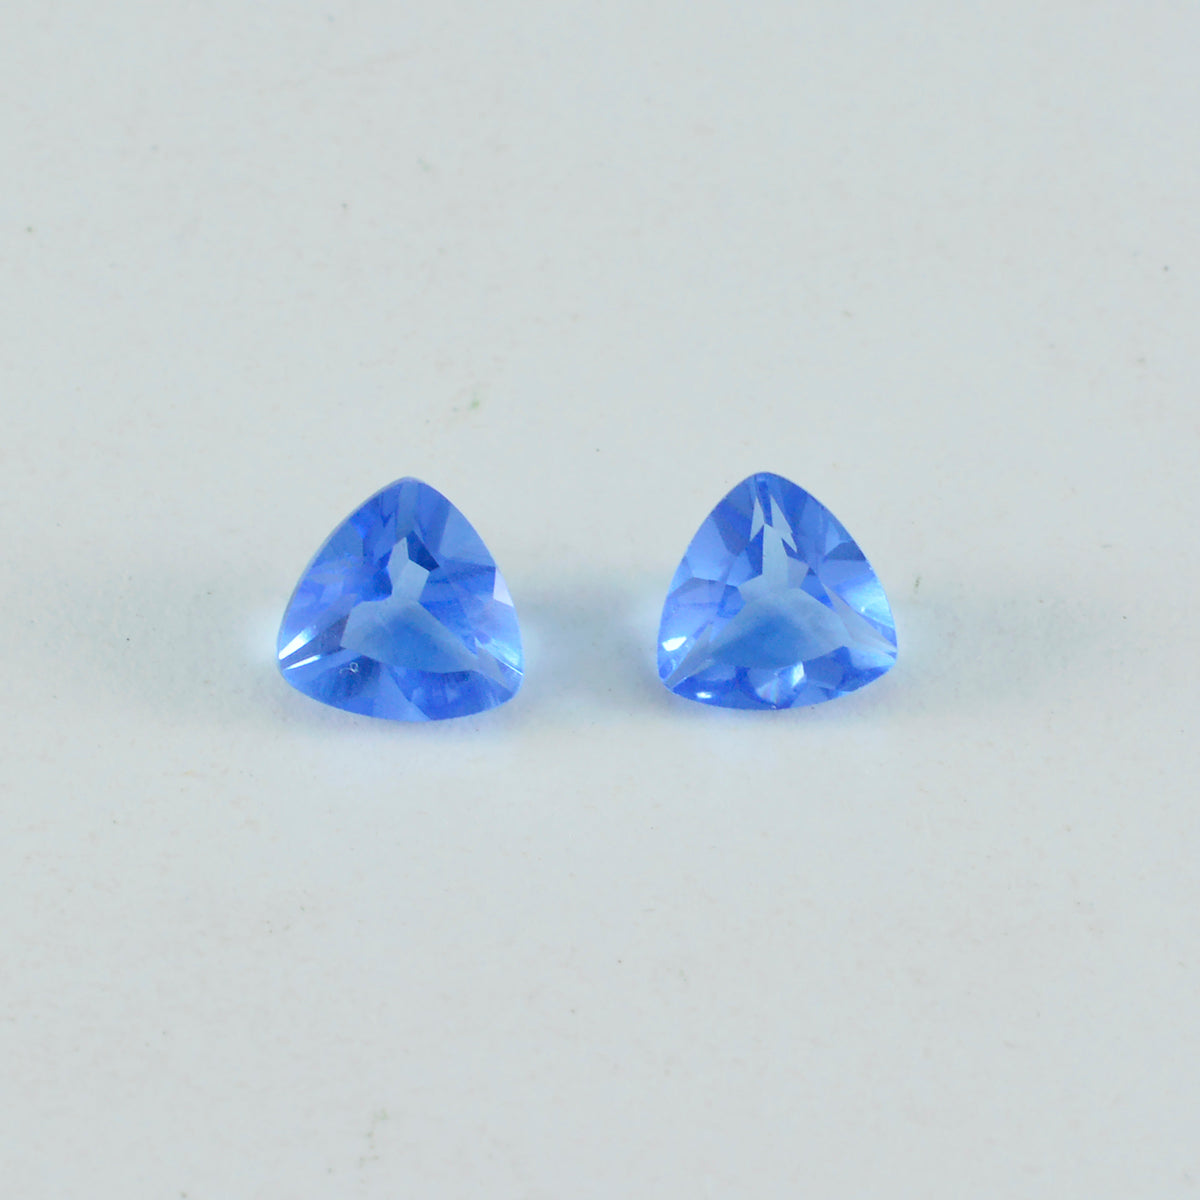 Riyogems 1 pieza de zafiro azul CZ facetado 12x12 mm forma de trillón piedra preciosa de calidad de belleza